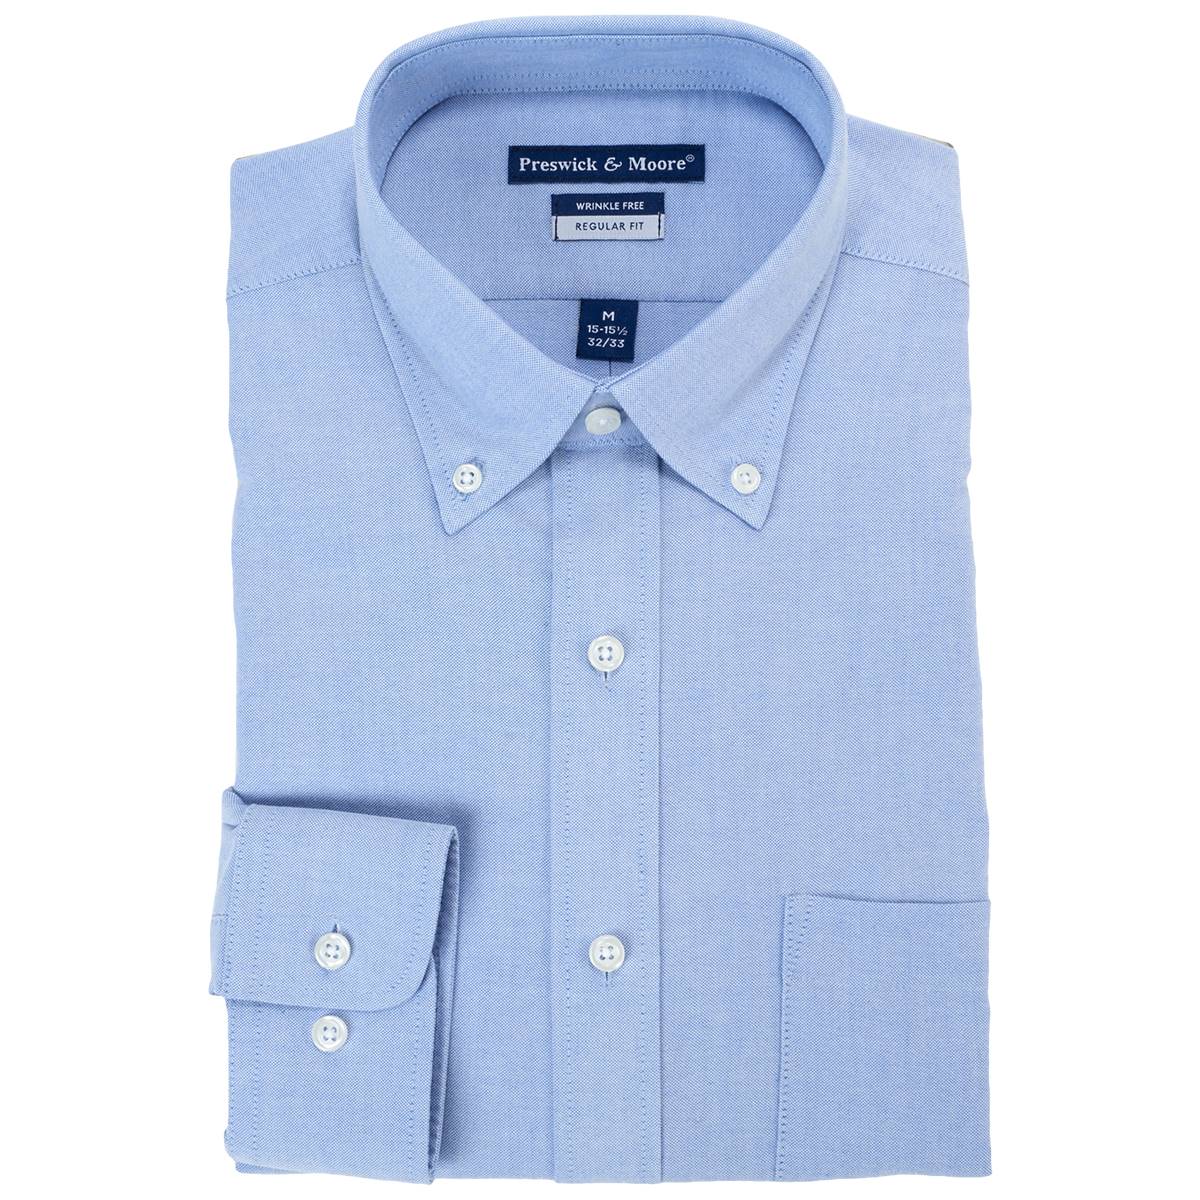 Mens Preswick & Moore Regular Fit Oxford Dress Shirt - Light Blue